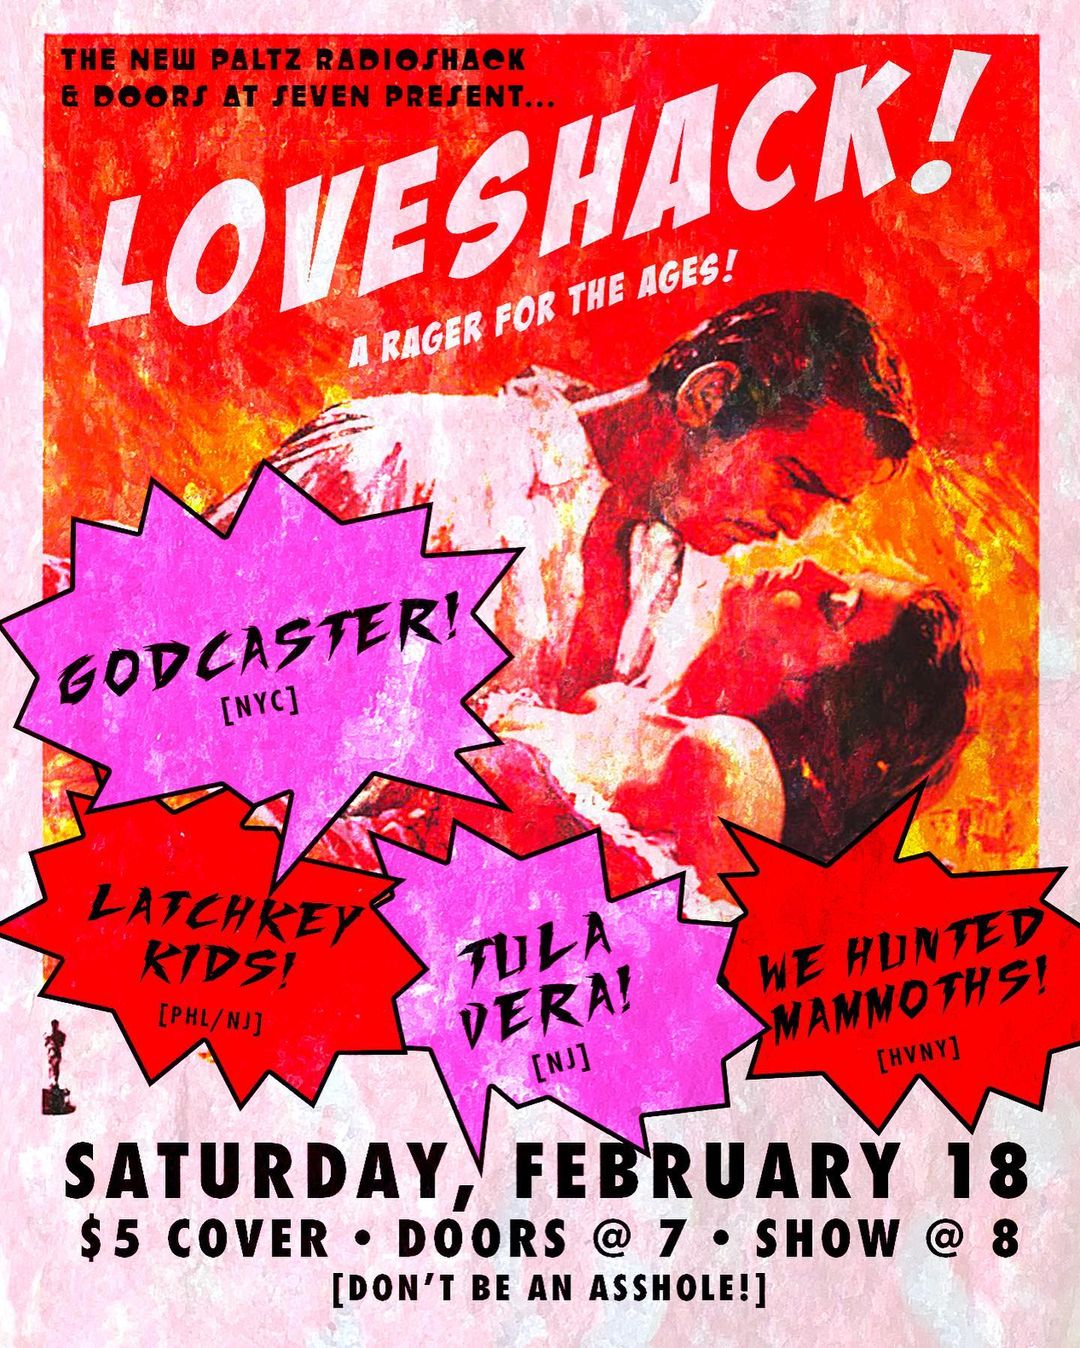 Godcaster/ Latchkey Kids/ Tula Vera/ We Hunted Mammoths! at RADIOSHACK in New Paltz, NY on 2/18/2023